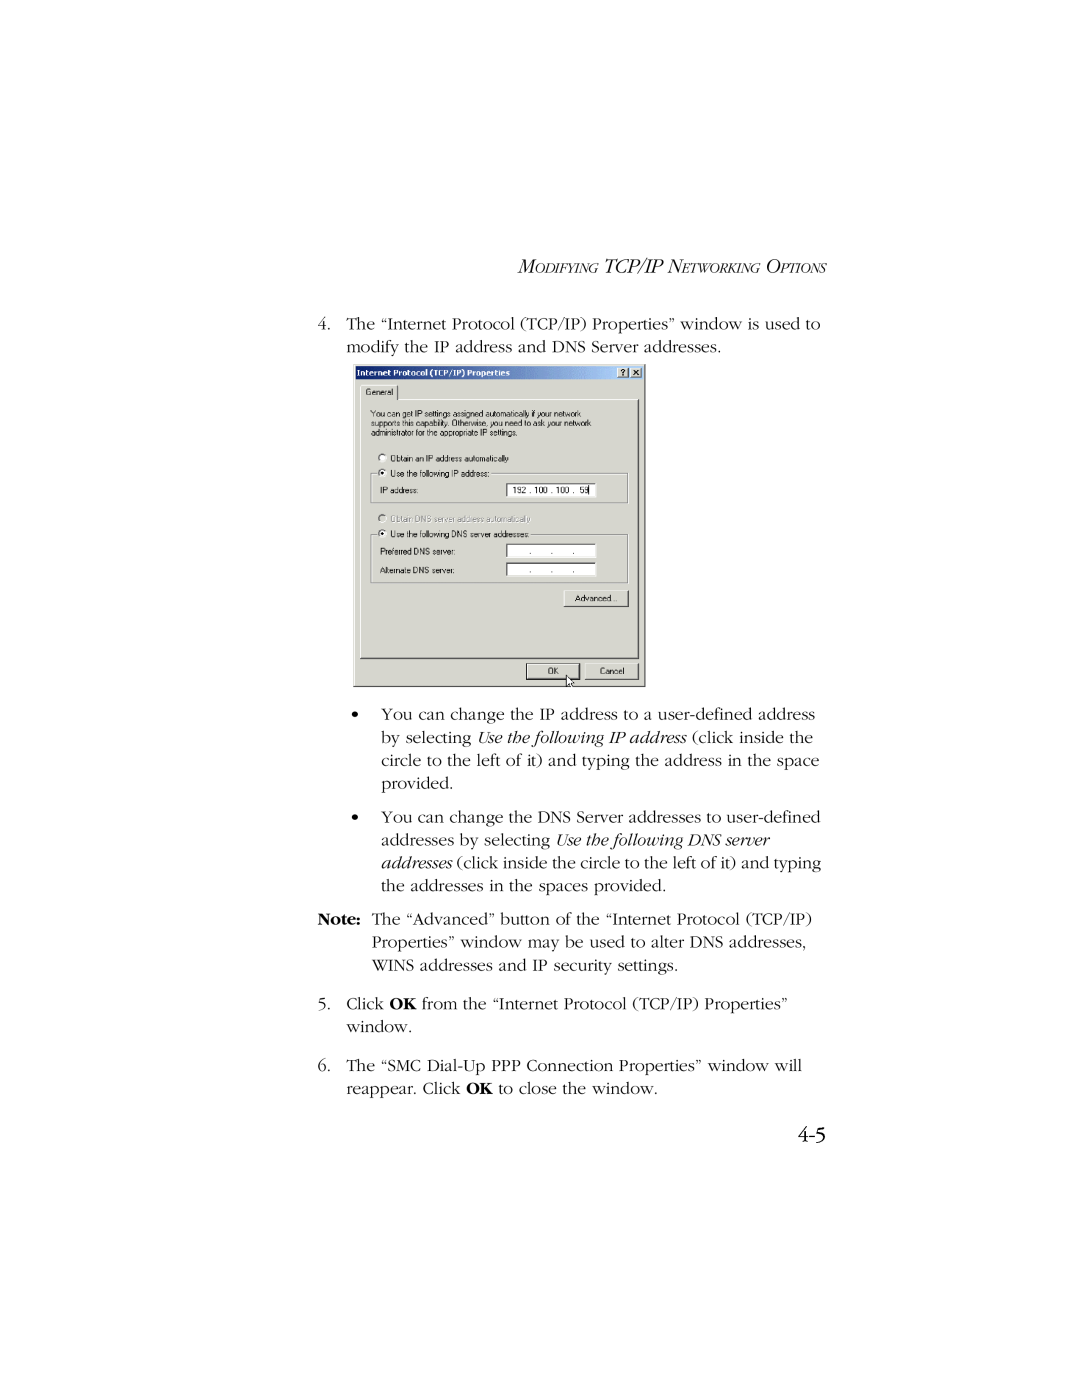 SMC Networks SMC7003-USB manual Click OK from the “Internet Protocol TCP/IP Properties” window 